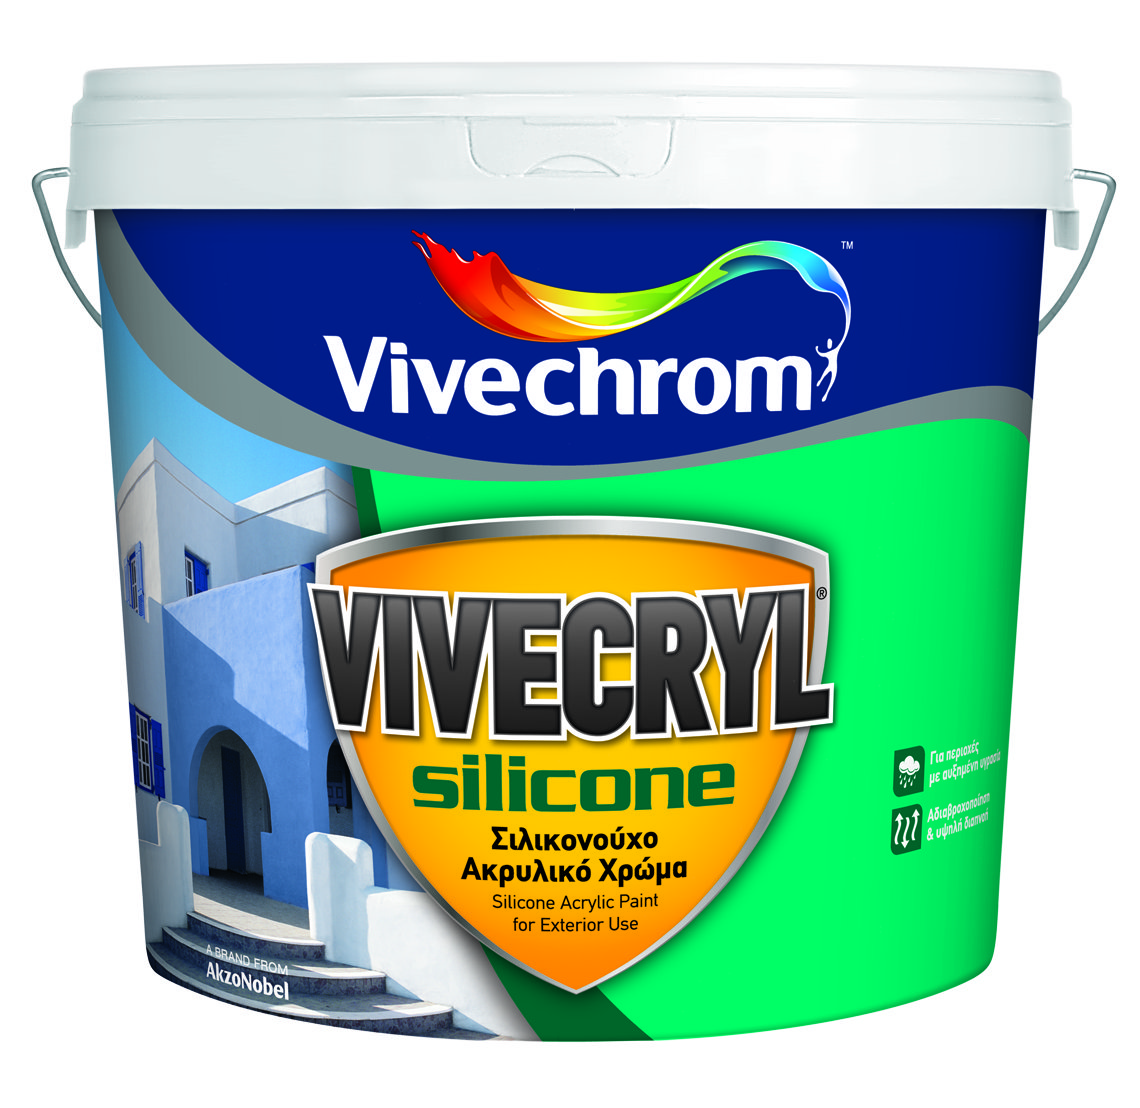 Vivechrom Vivecryl Silicone Οικολογικό Ακρυλικό Χρώμα Matt Finish Λευκό 3L